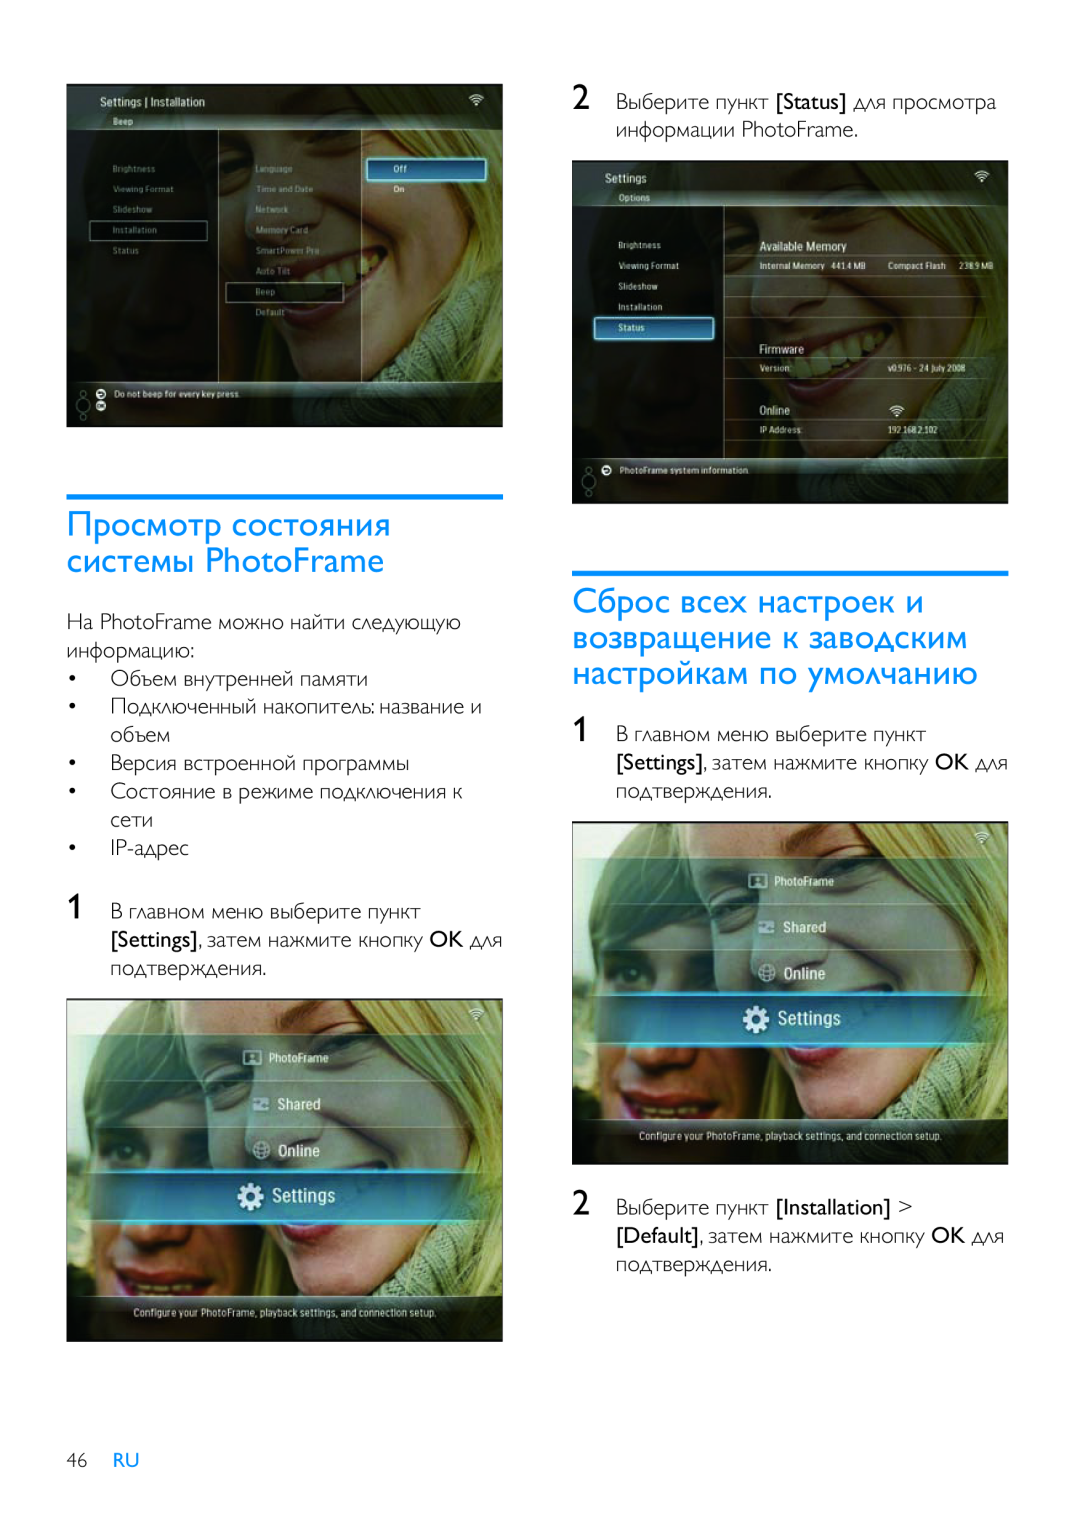 Philips 8FF3WMI manual ǜǽǻǾǹǻǿǽ ǾǻǾǿǻȌǺǵȌ ǾǵǾǿǲǹȈ PhotoFrame 